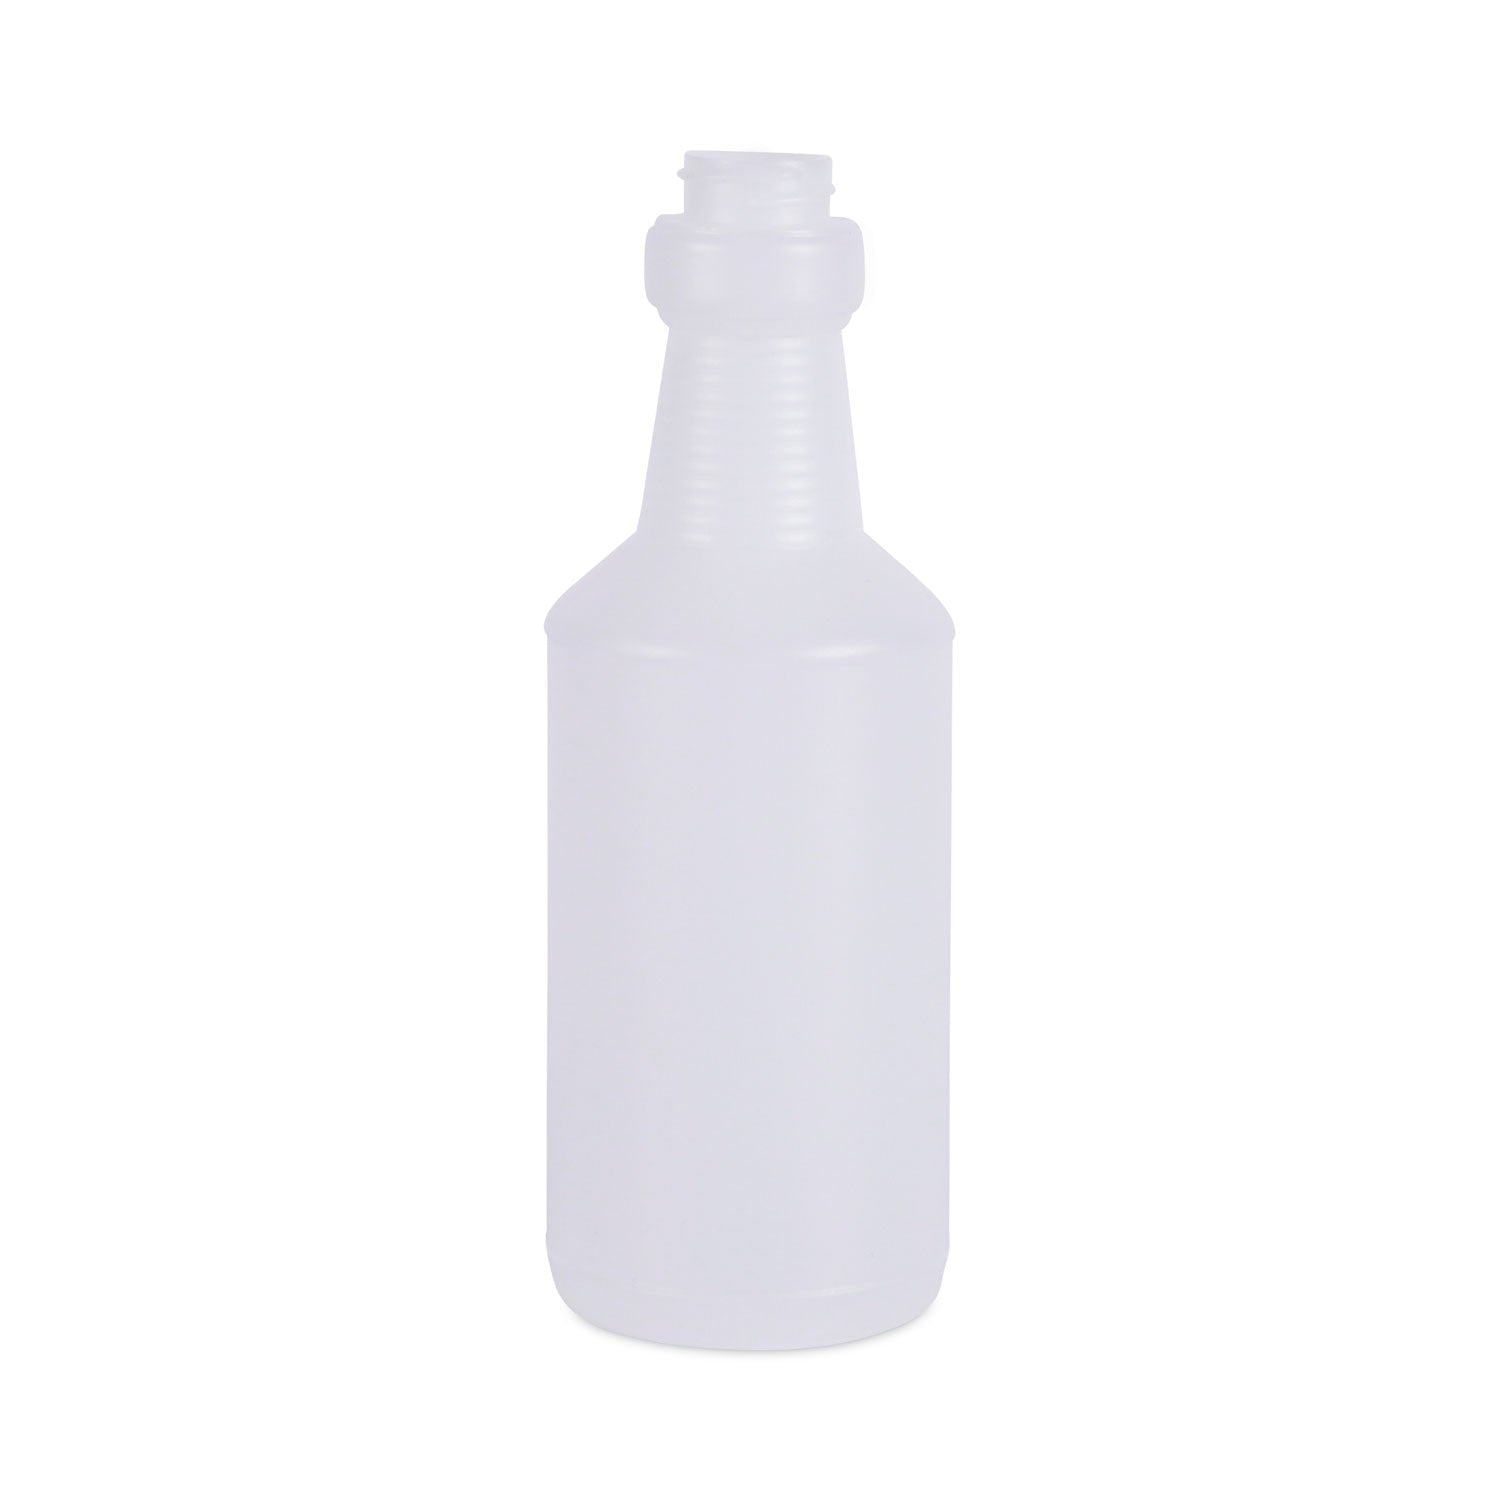 handi-hold-spray-bottle-16-oz-clear-24-carton_bwk00016 - 1